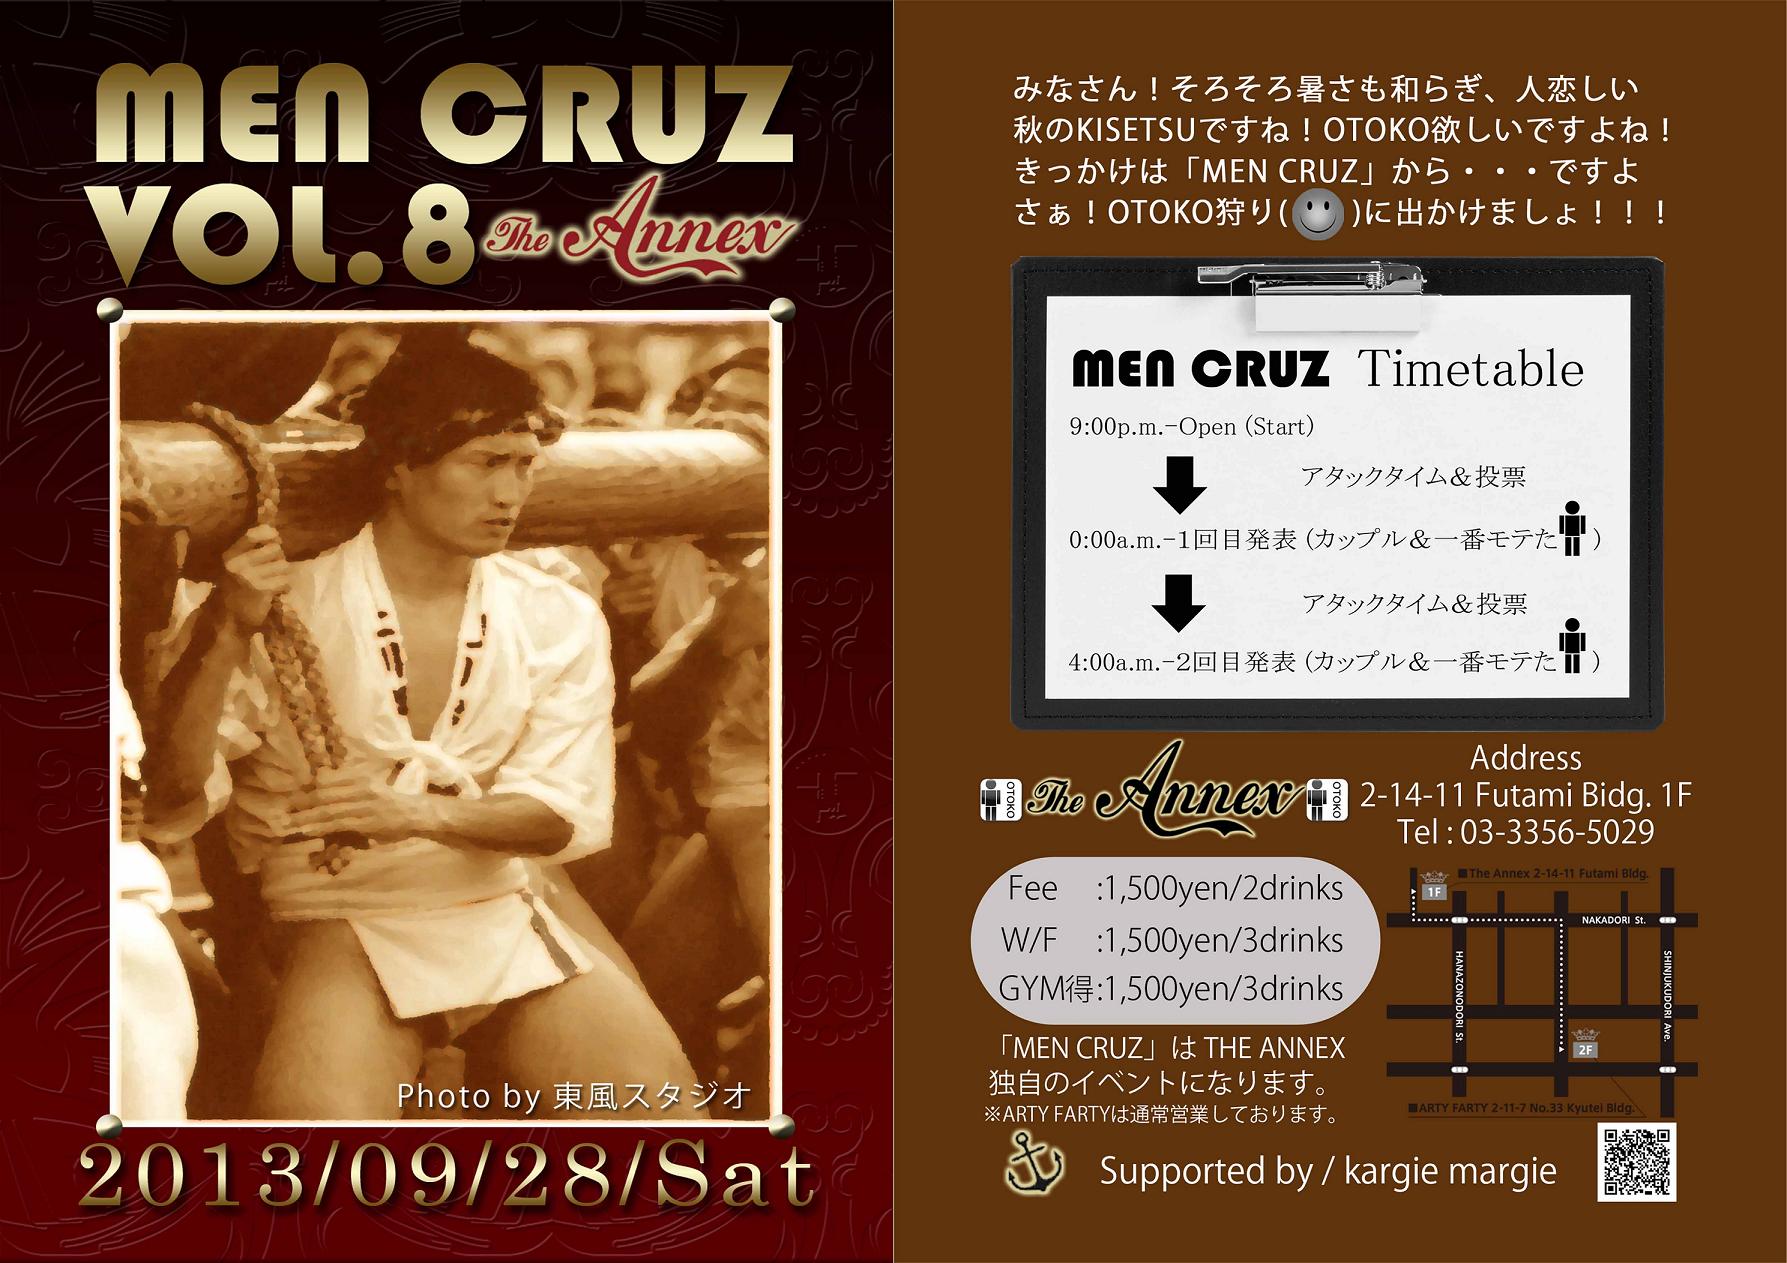 Men Cruz Vol.8 (Hunt Shot Game) (Men Only) 1787x1263 309.9kb